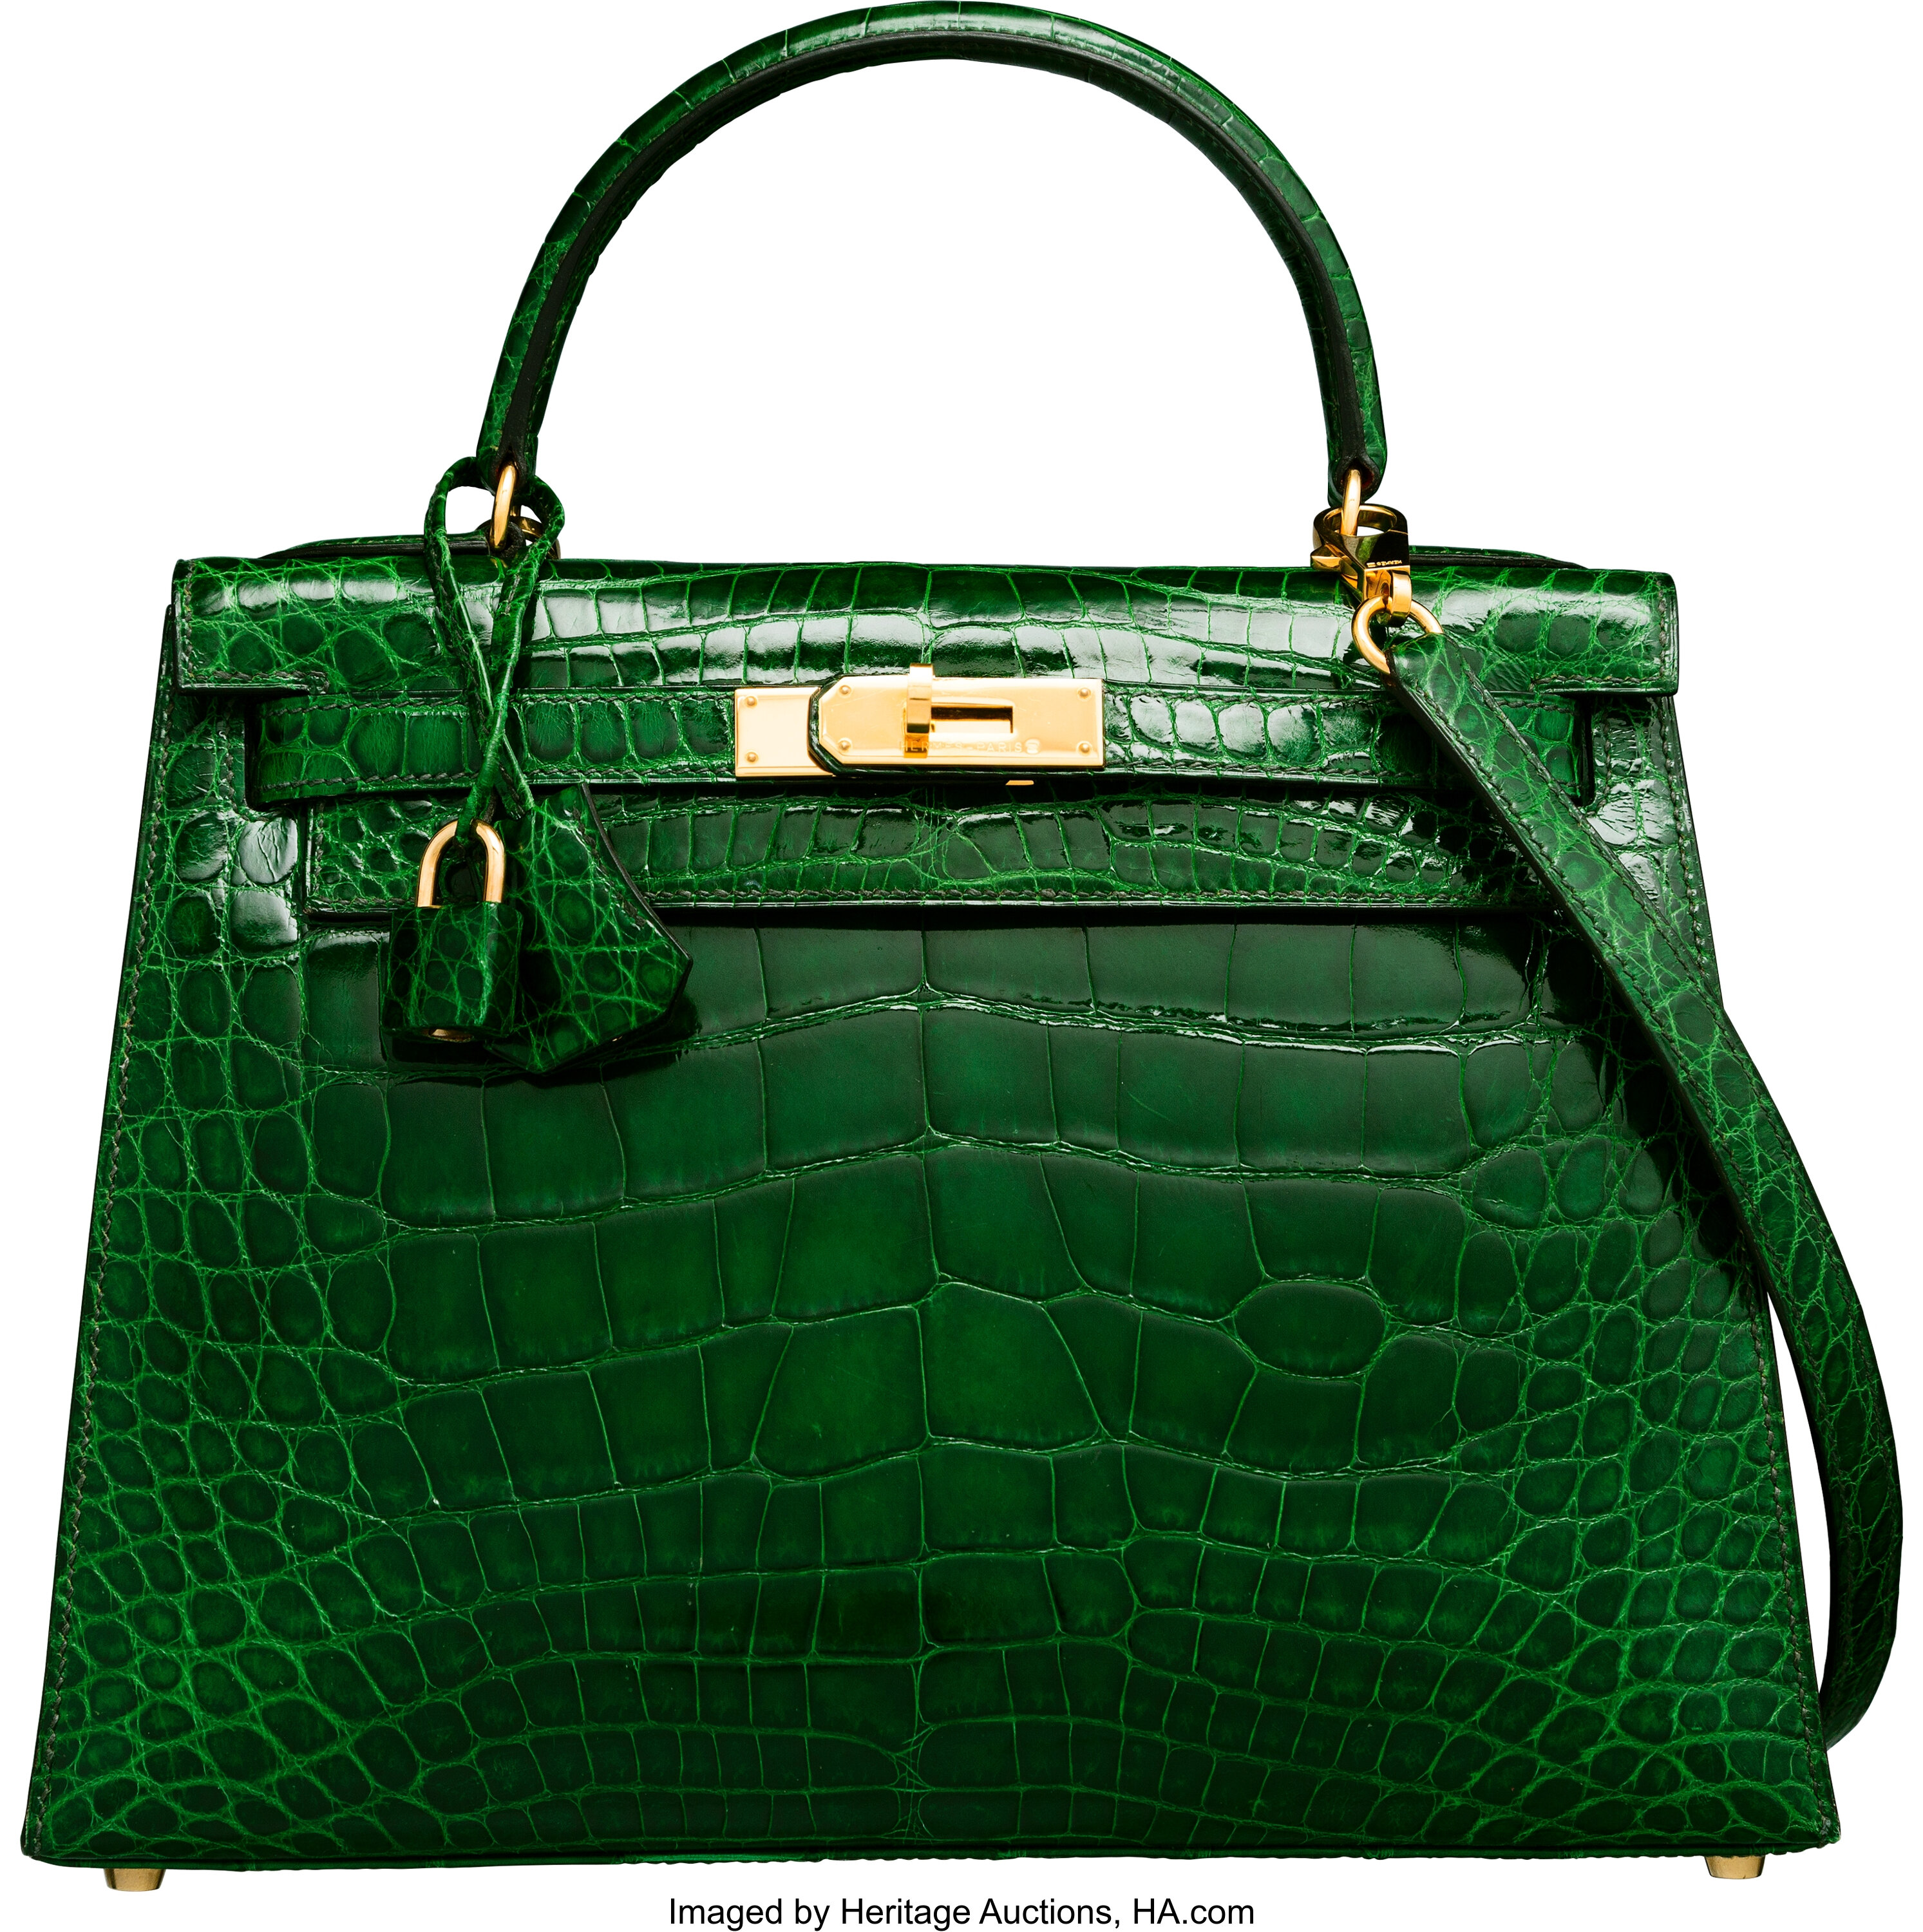 Hermes 28cm Shiny Vert Emerald Alligator Sellier Kelly Bag with